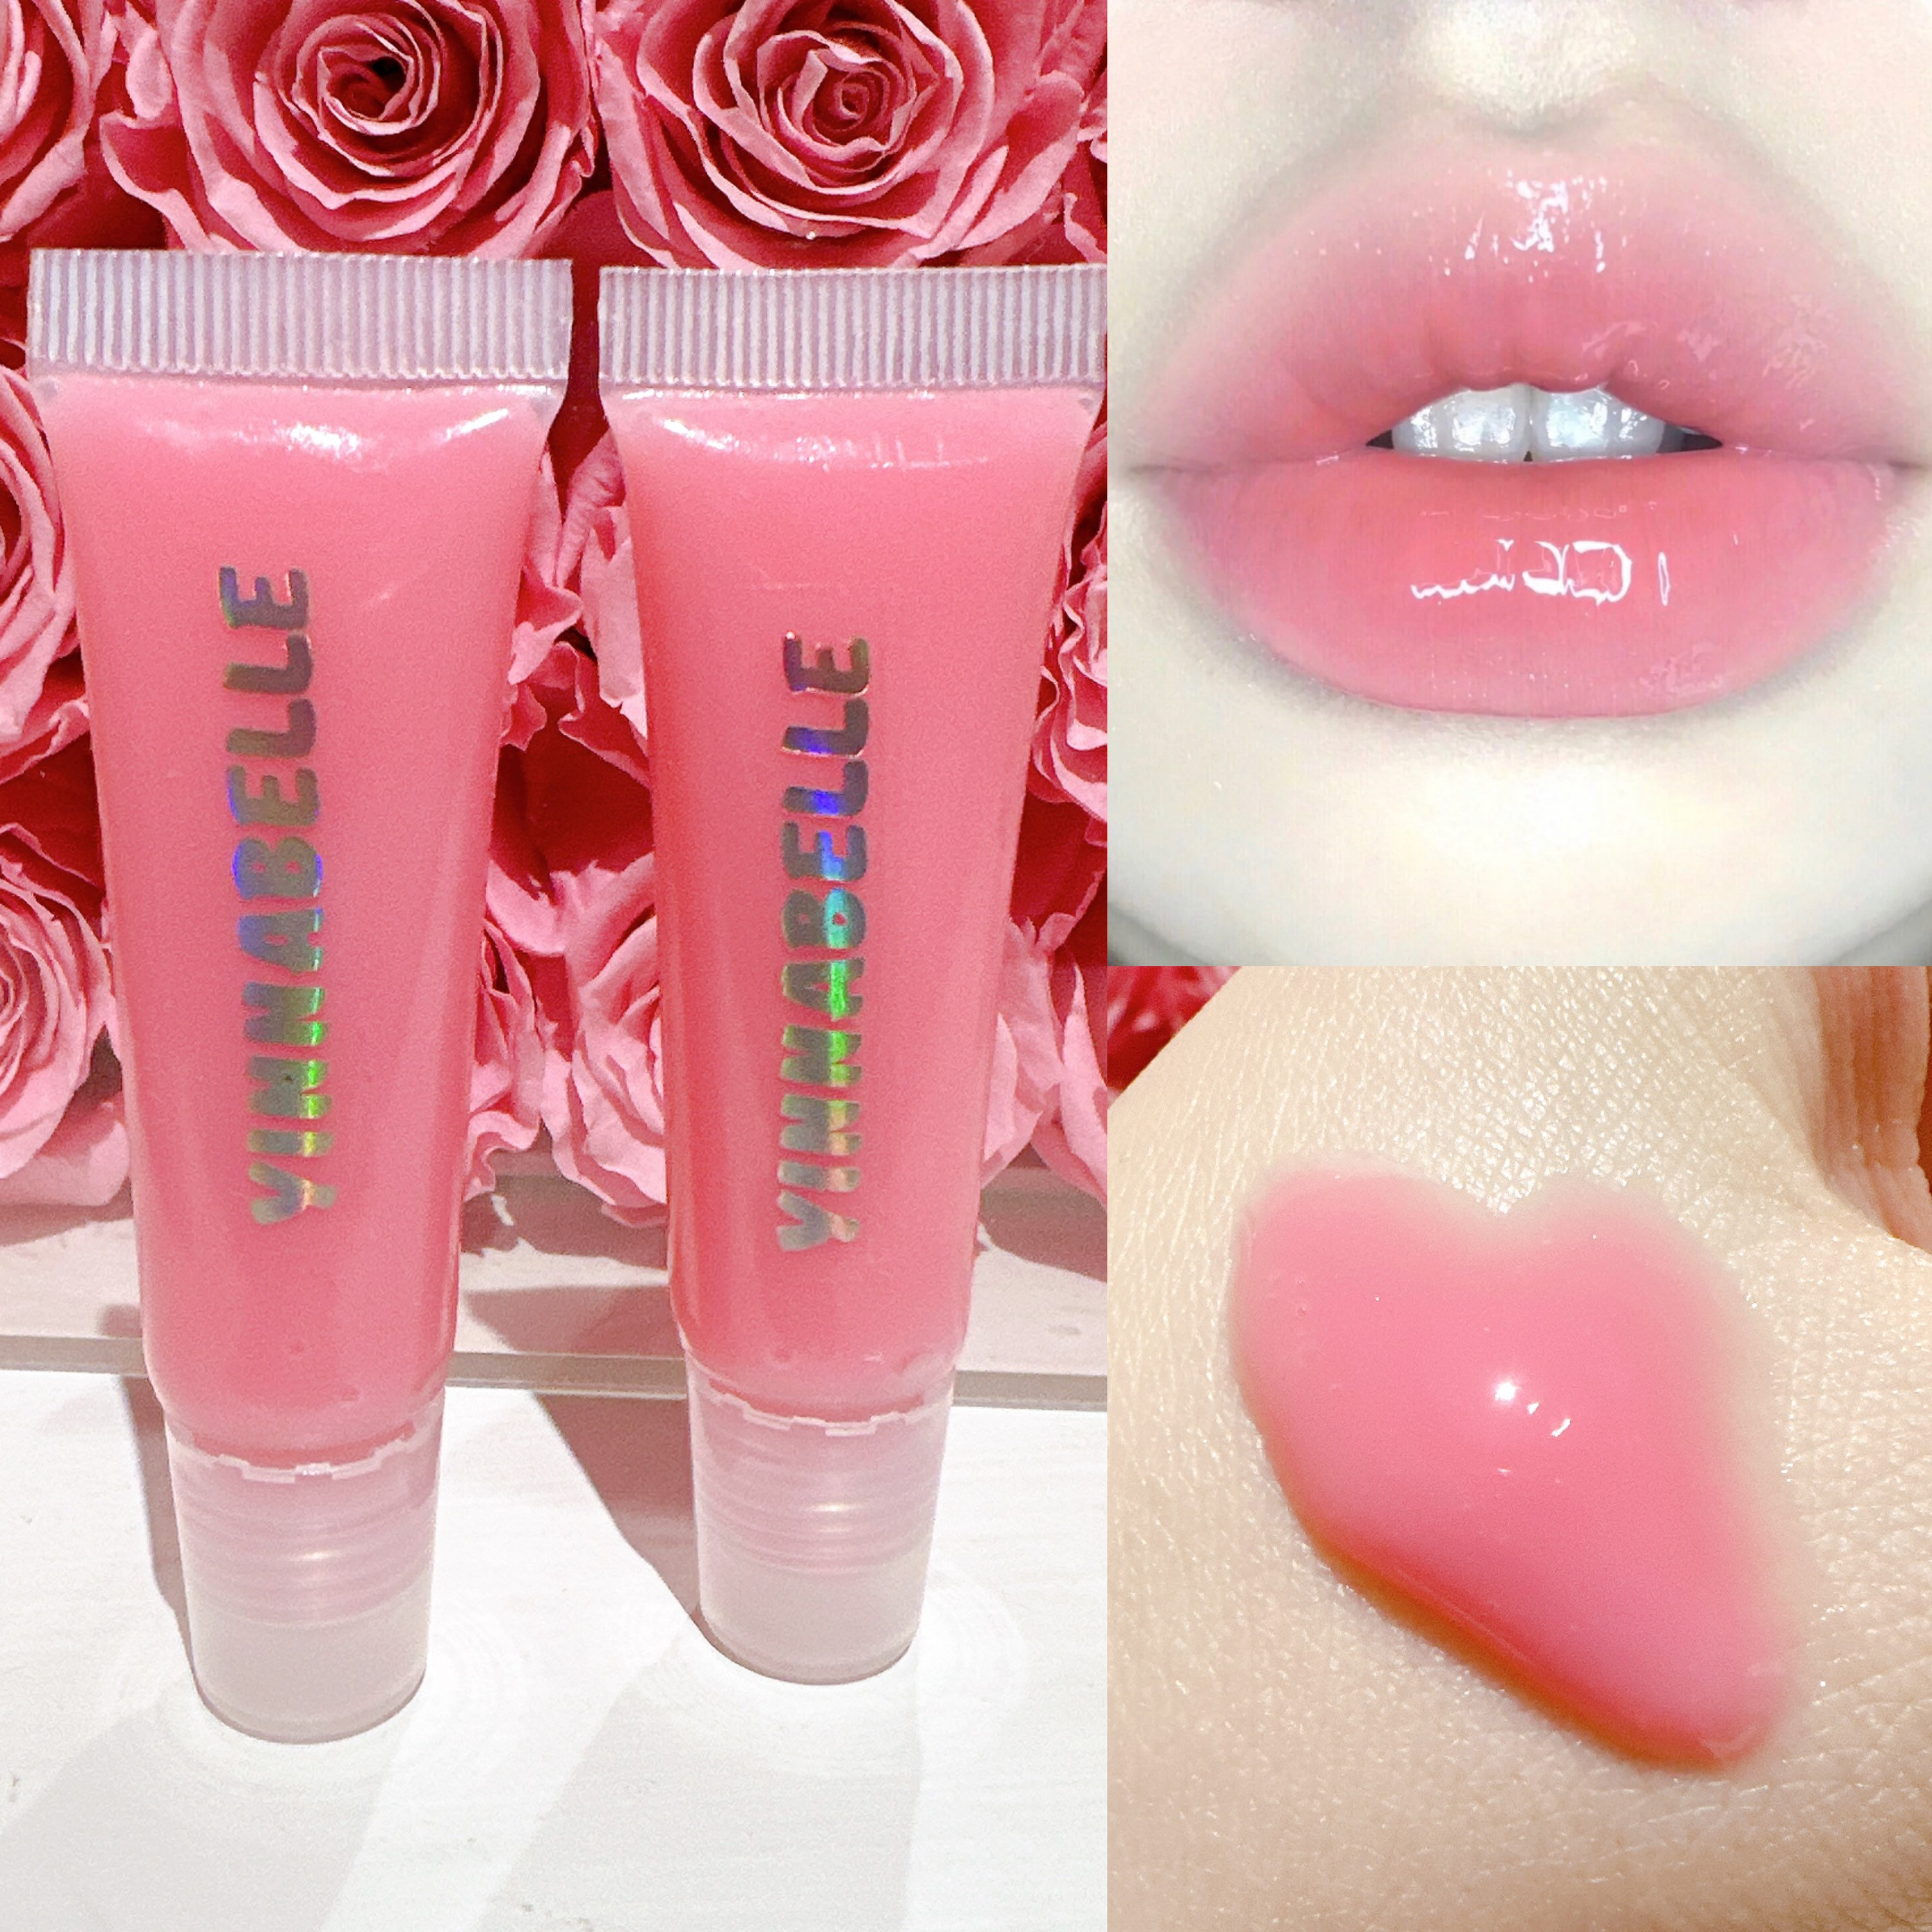 10 PACK 6ML Purple Lip Gloss Tubes Vide En gros avec baguette applicateur  Bulk Lipgloss Supplies Wholesale Cosmetic -  France